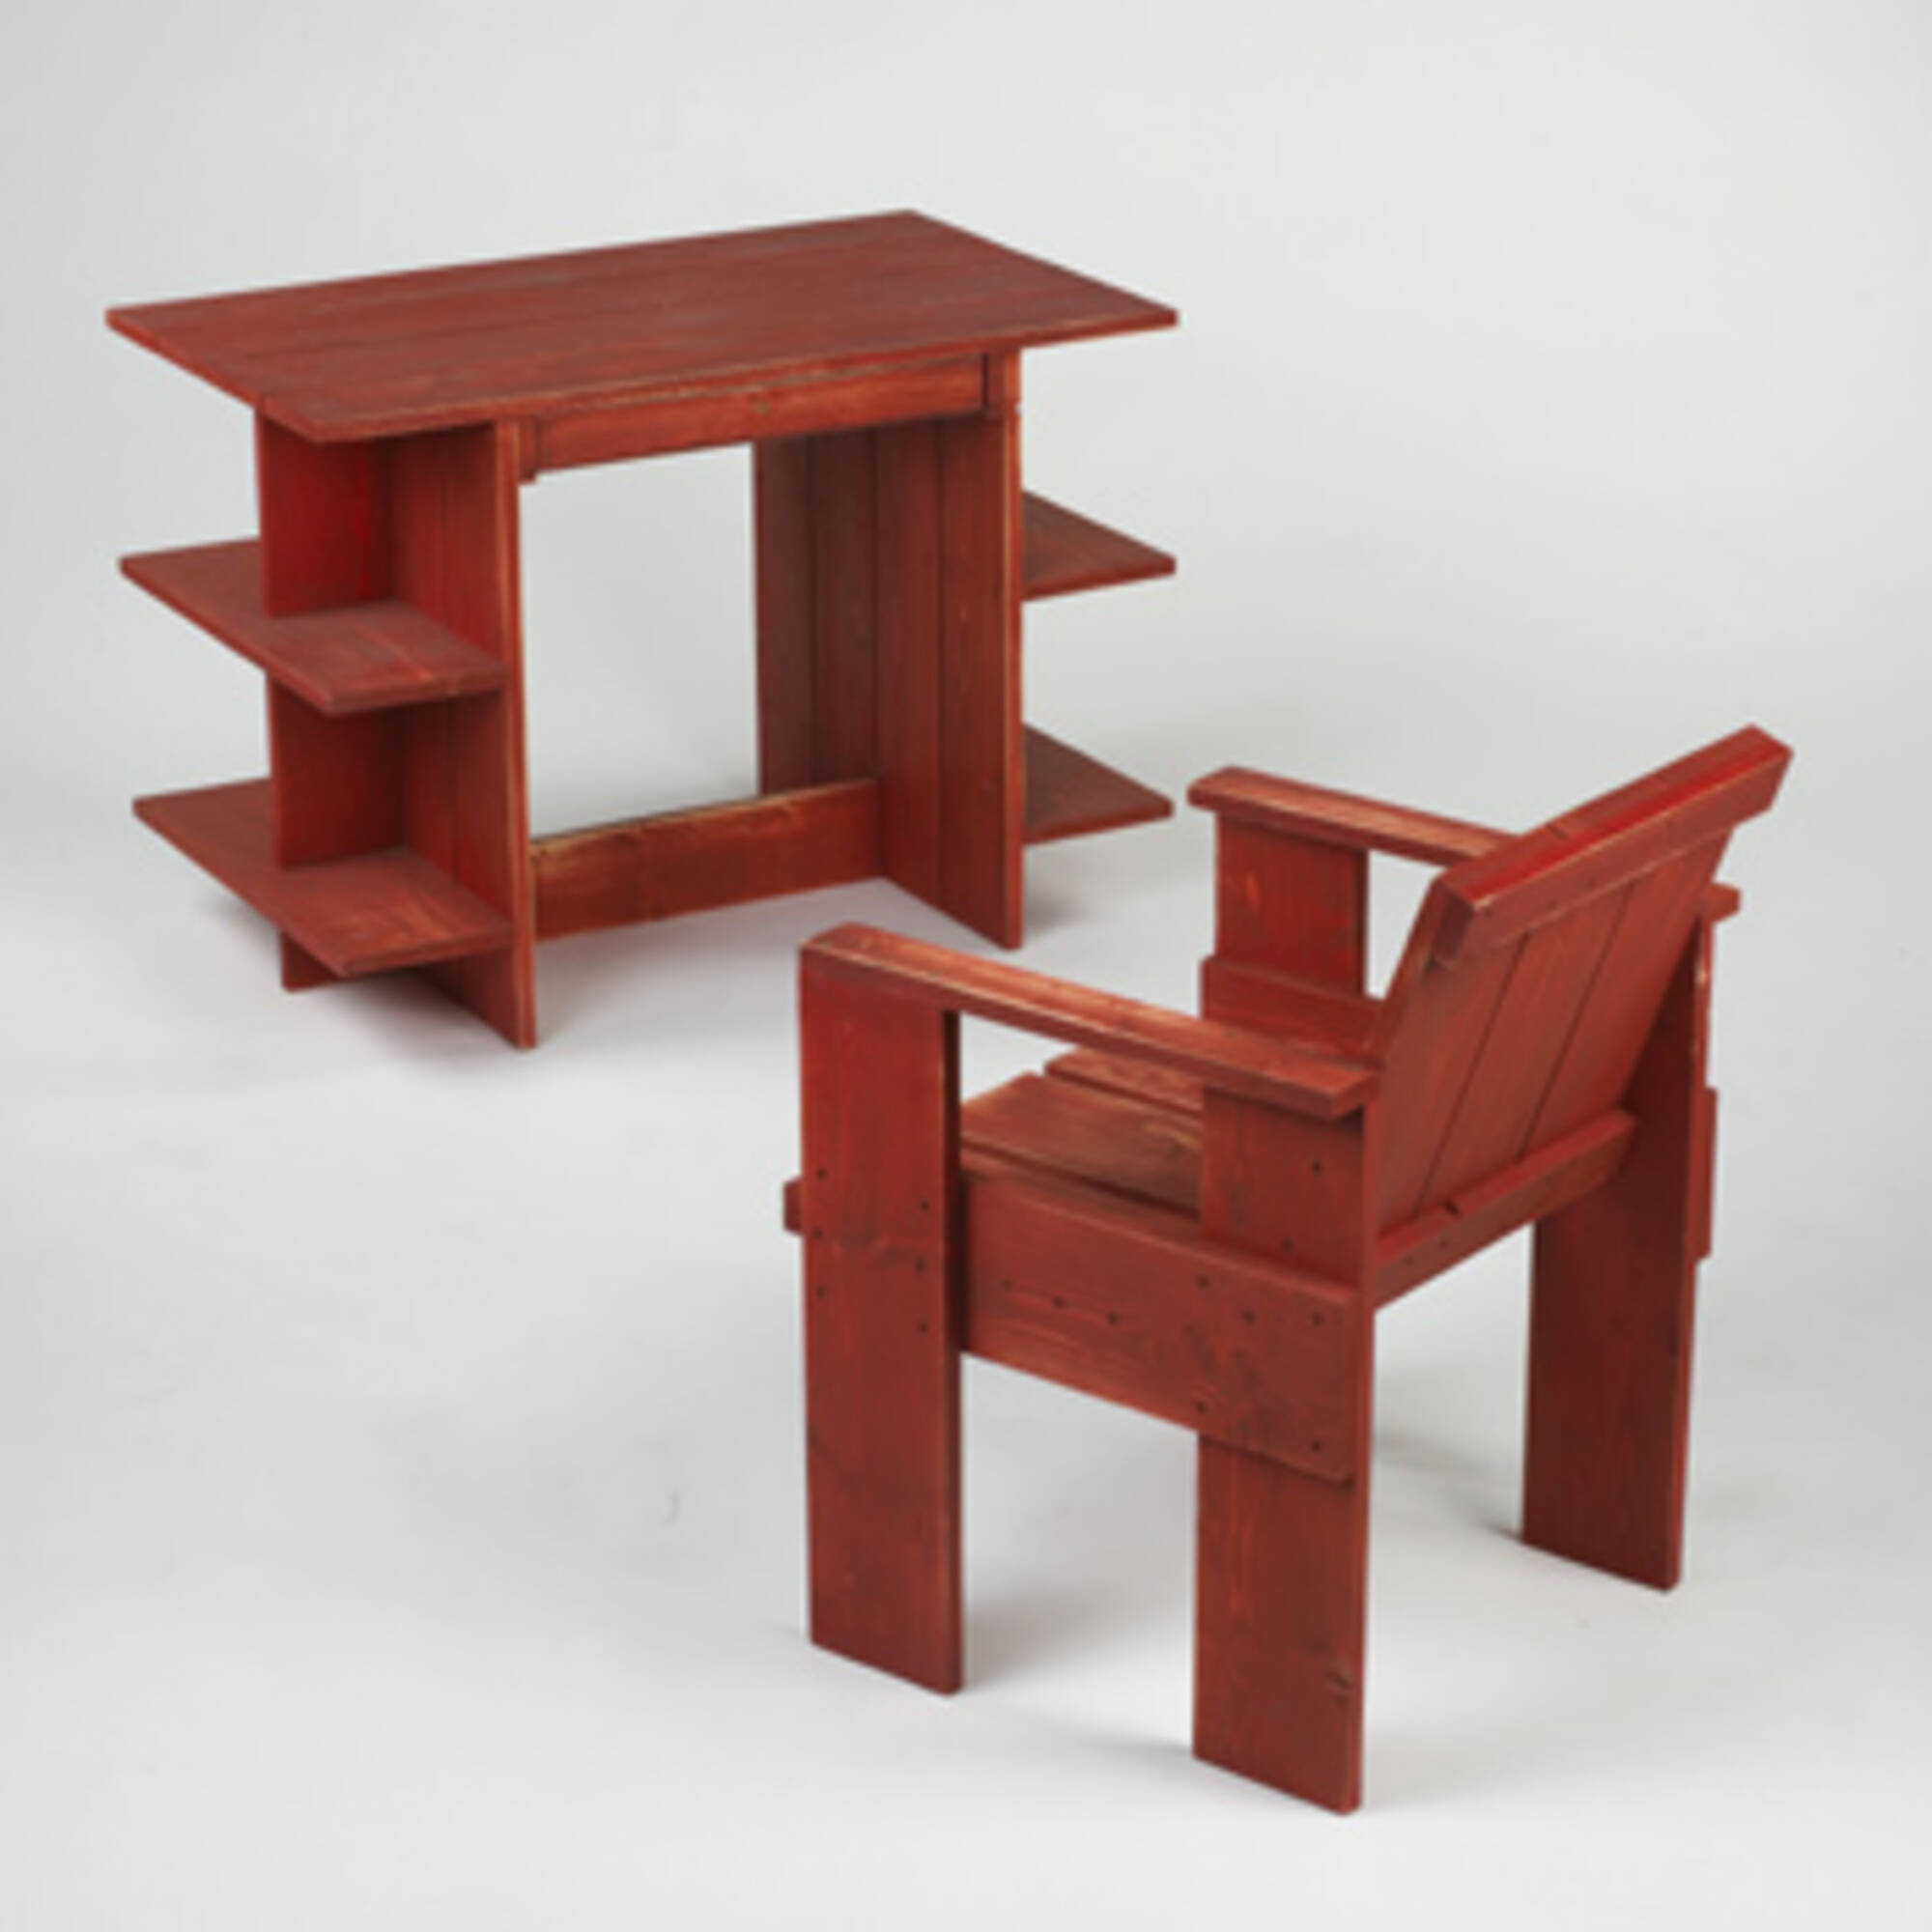 361 Gerrit Rietveld Crate Desk And Chair Modern Design 9 June